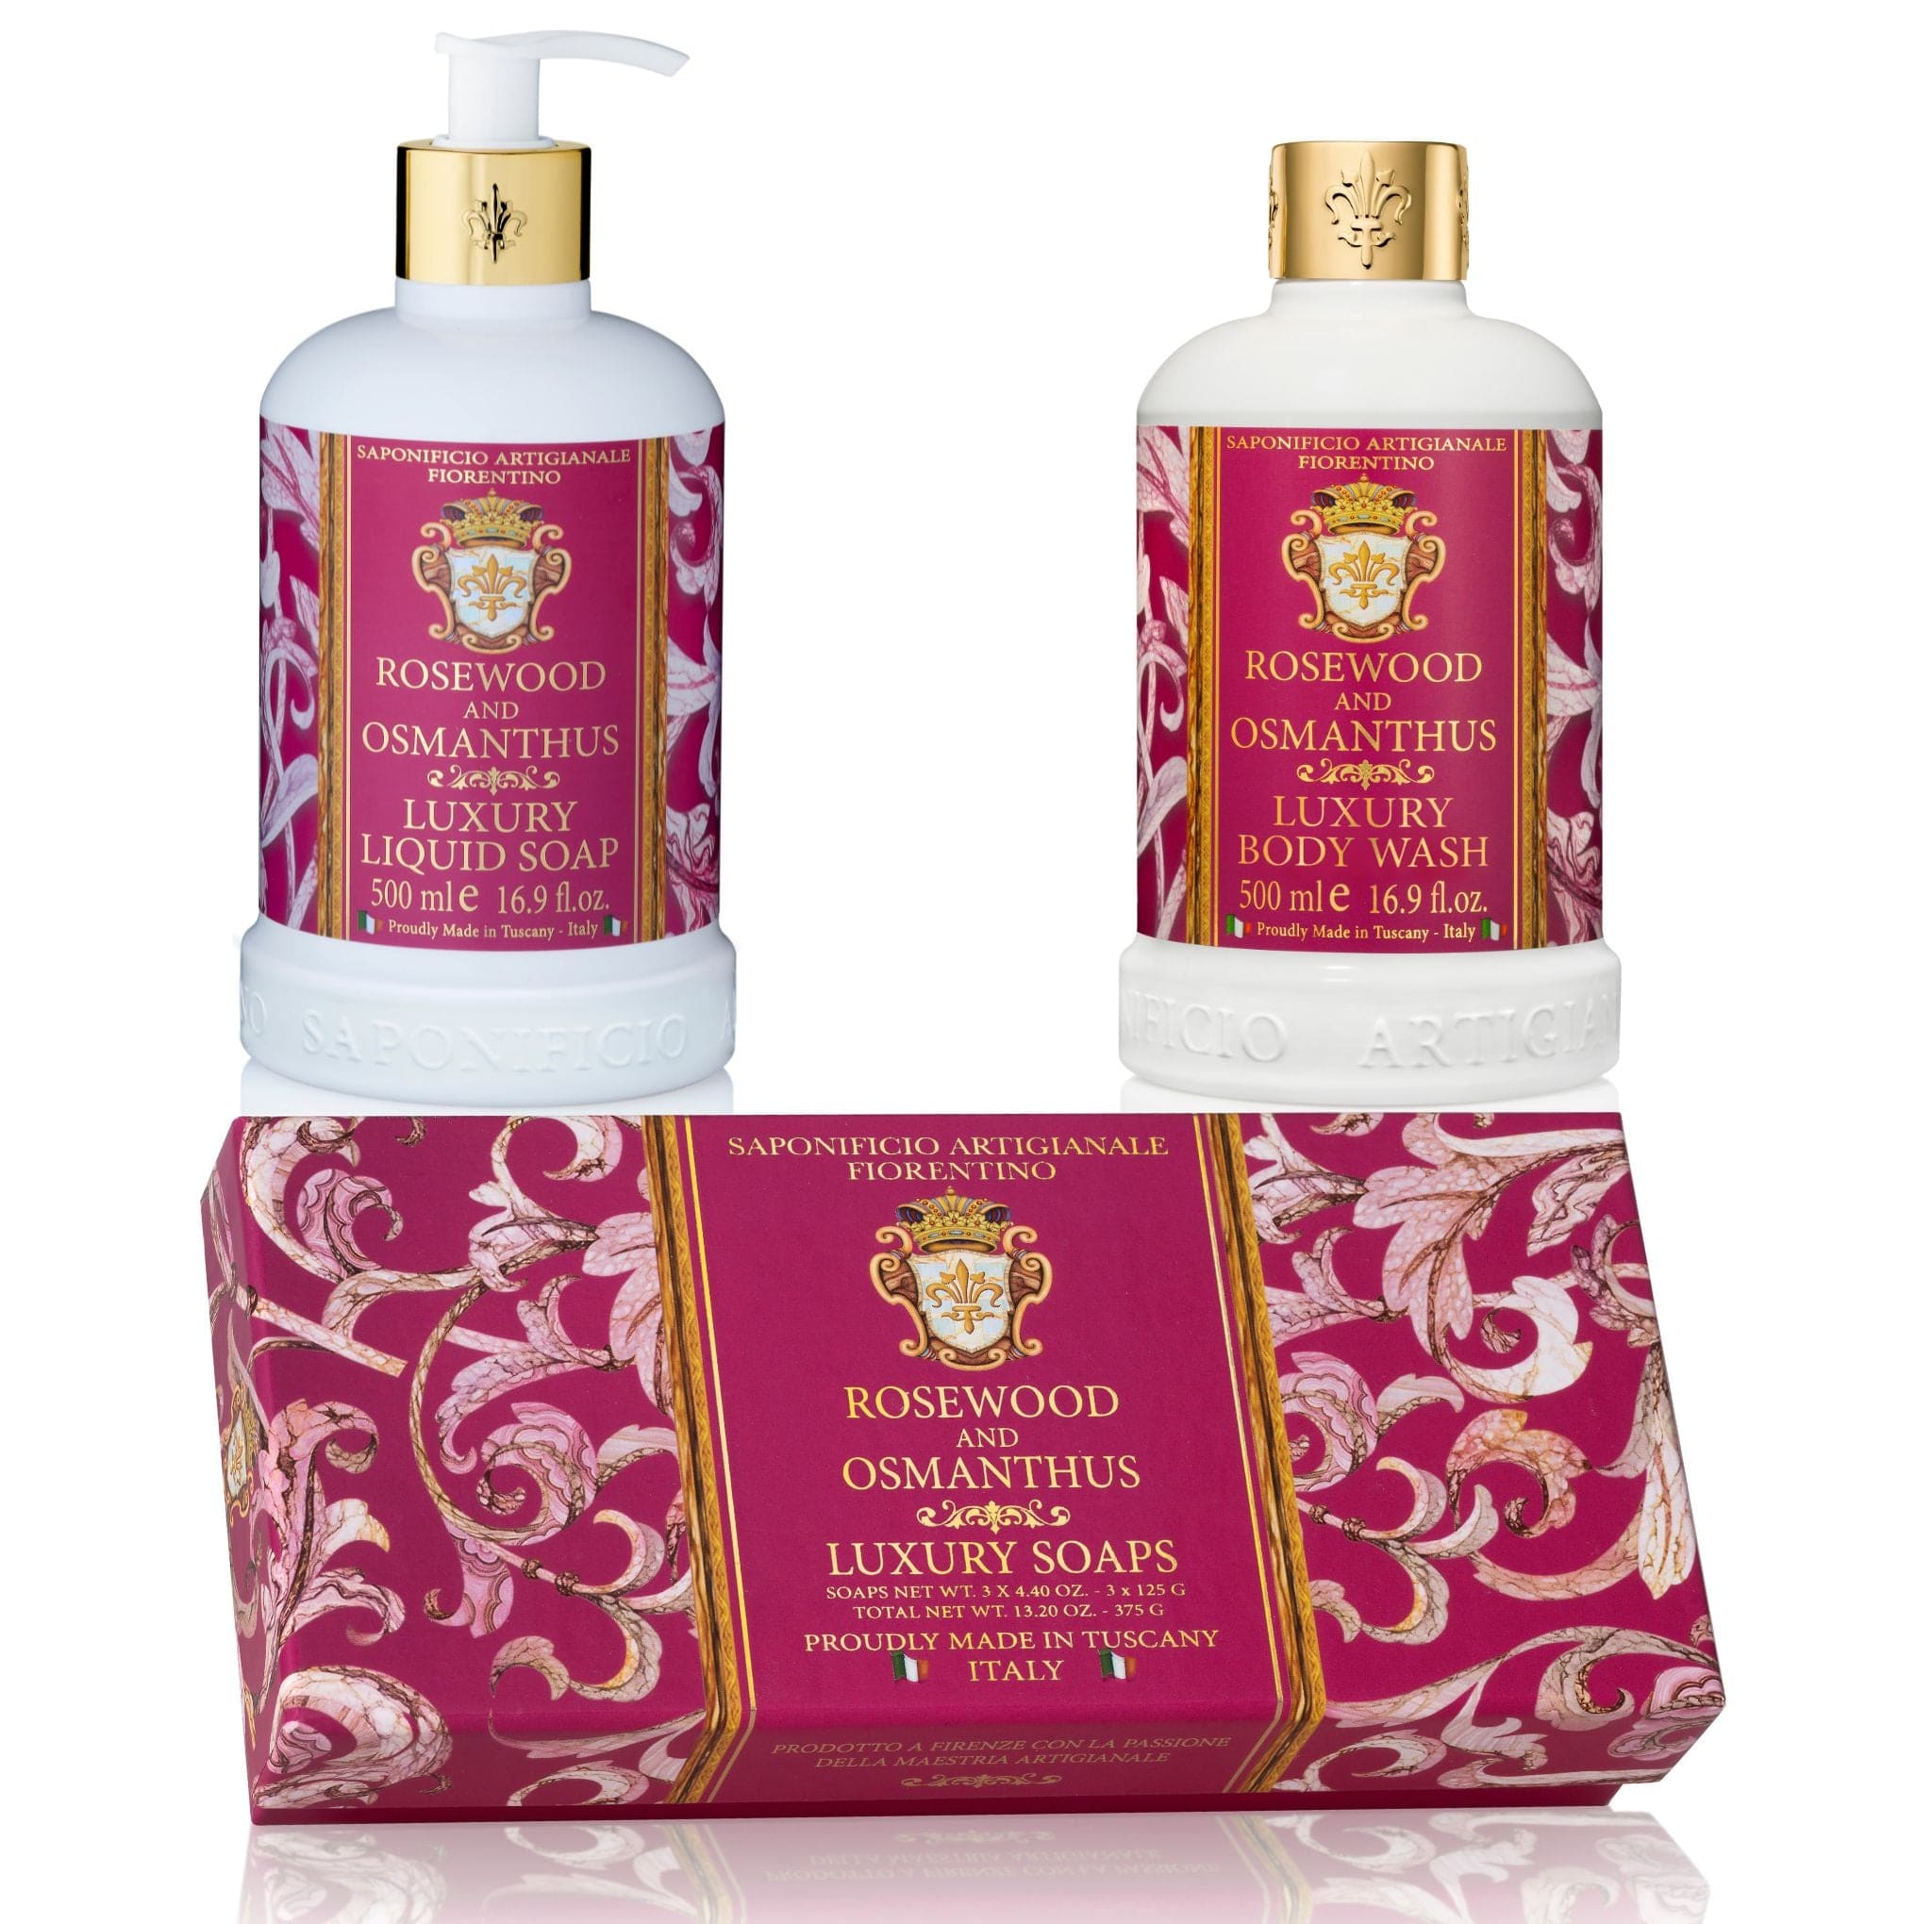 Saponificio Artigianale Fiorentino Liquid Hand Soap Bundle Set Rosewood & Osmanthus Liquid Soap + Bodywash + 3x125g Bar Soap Brand